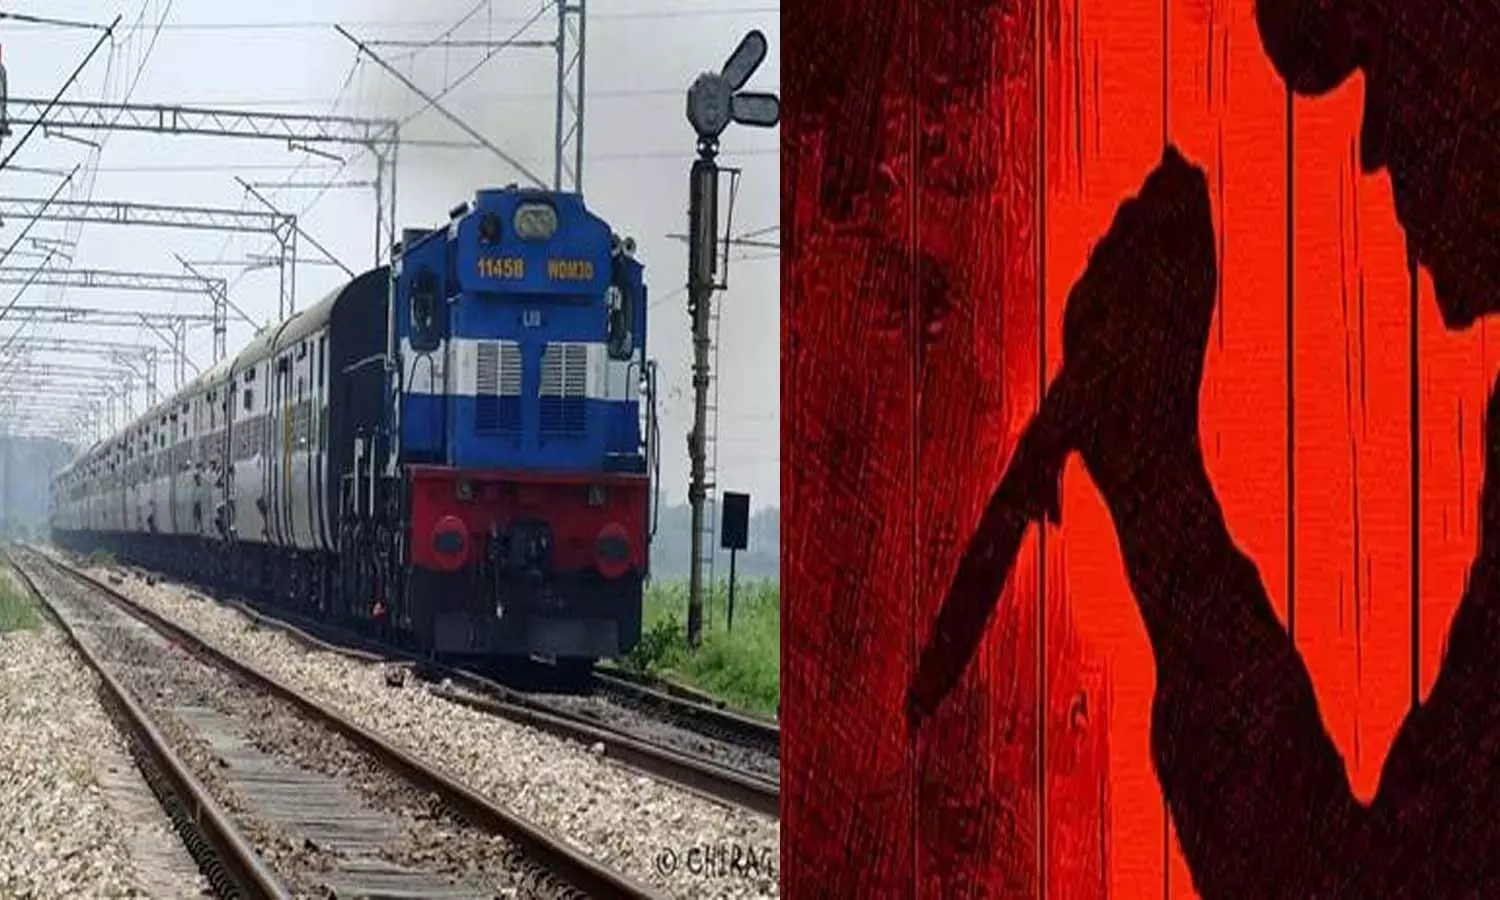 Murder in train